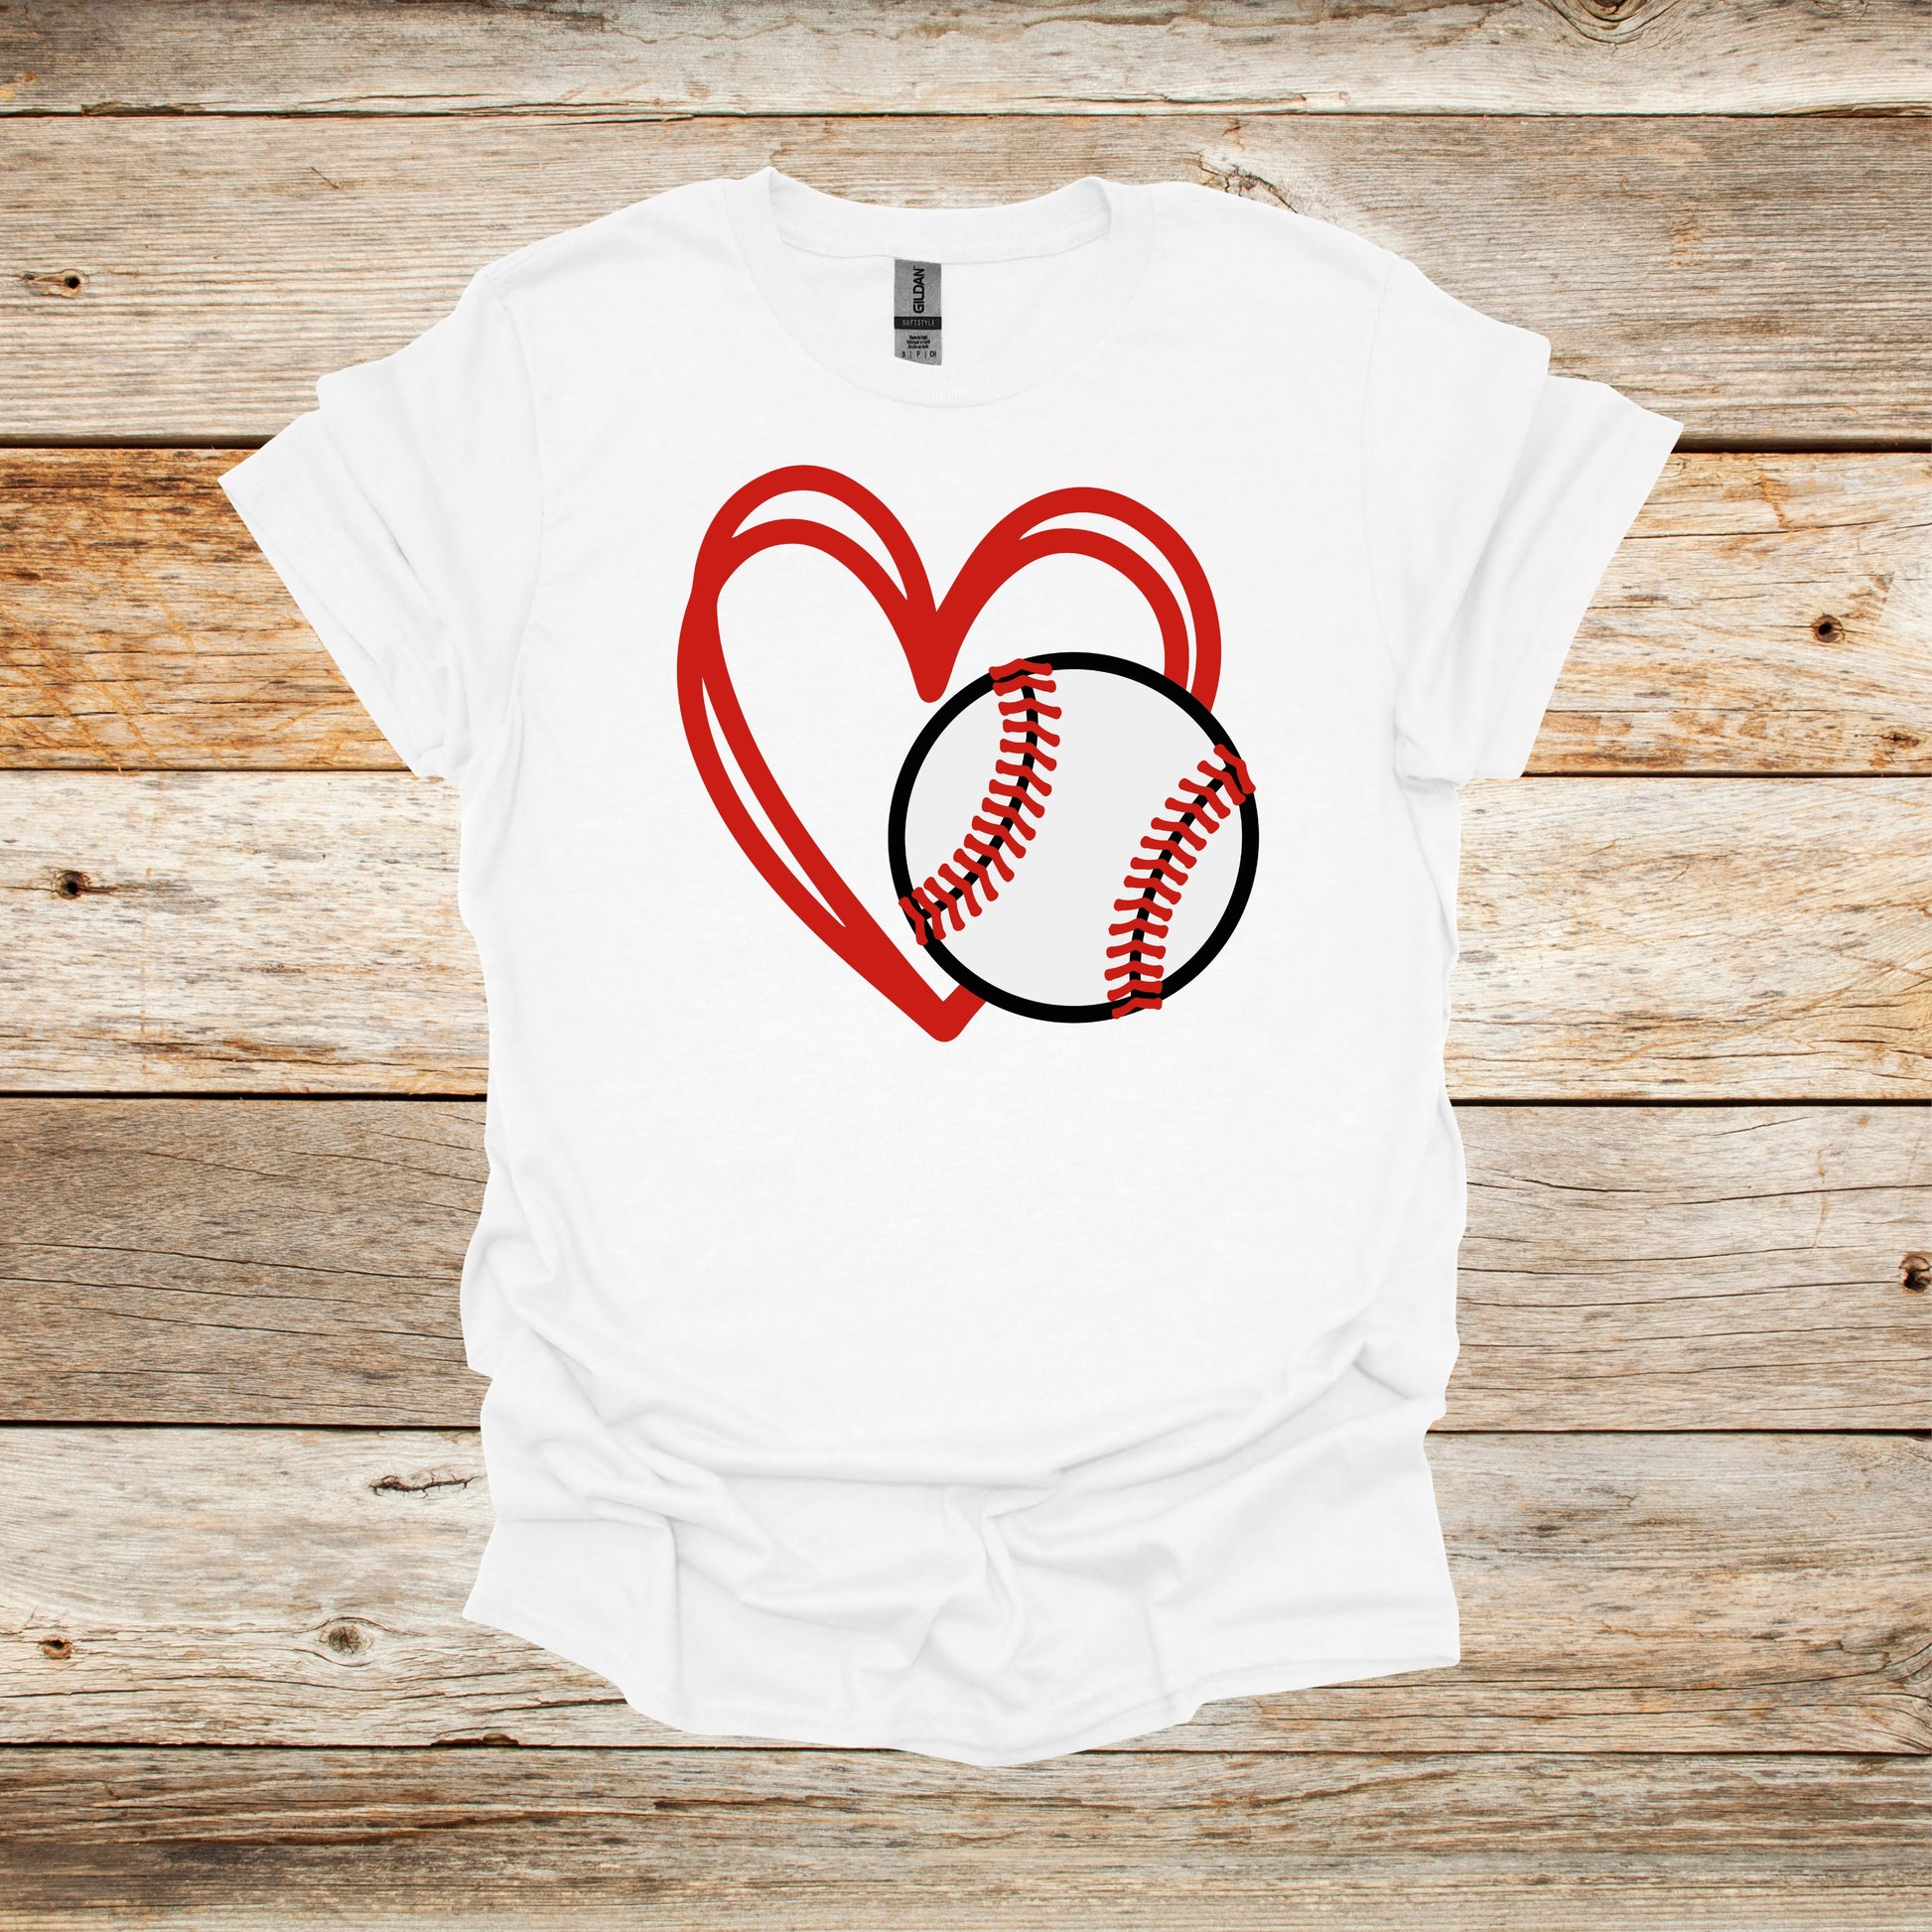 Baseball T-Shirt - Heart Baseball - Adult and Children's Tee Shirts - Sports T-Shirts Graphic Avenue White Adult Small 